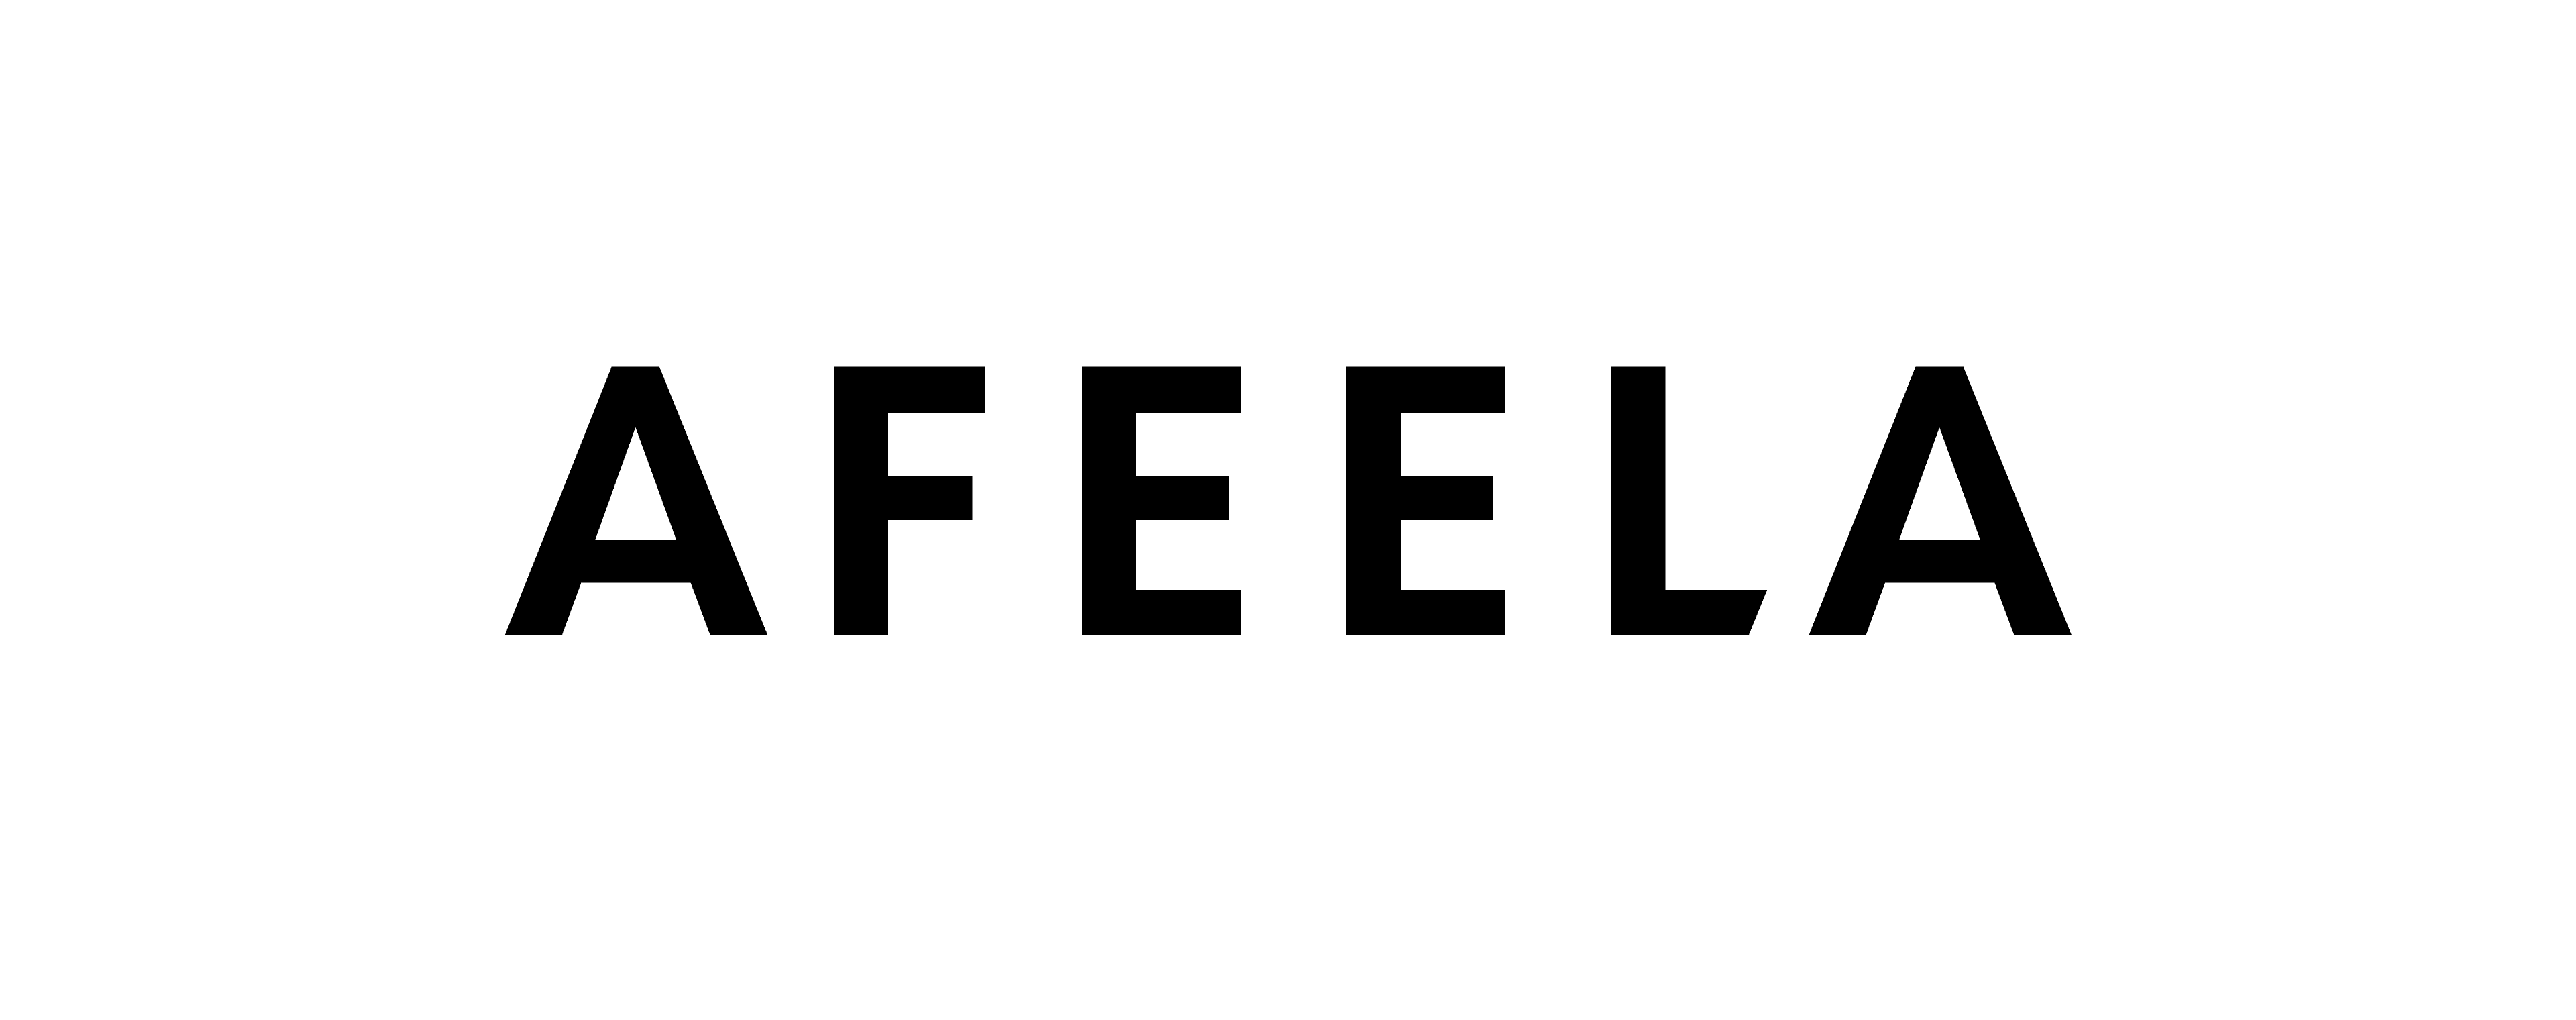 New Brand “AFEELA”